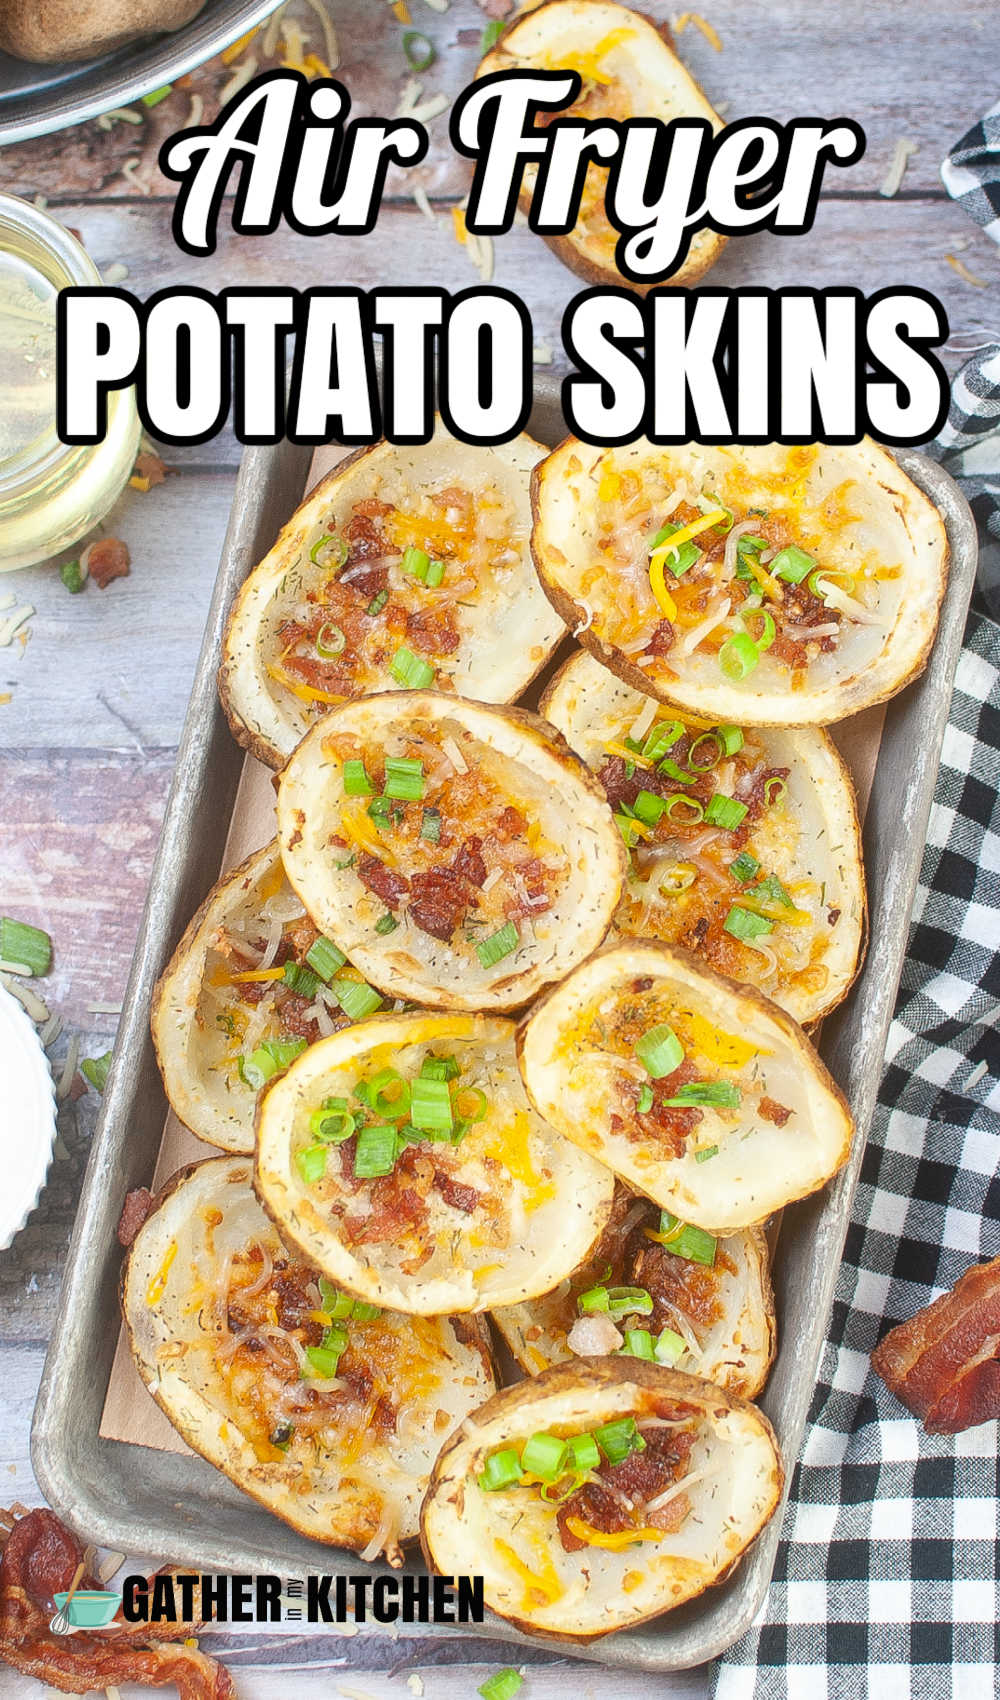 Pin image: top says "Air Fryer Potato Skins" and bottom has stuffed potato skins on a tray.